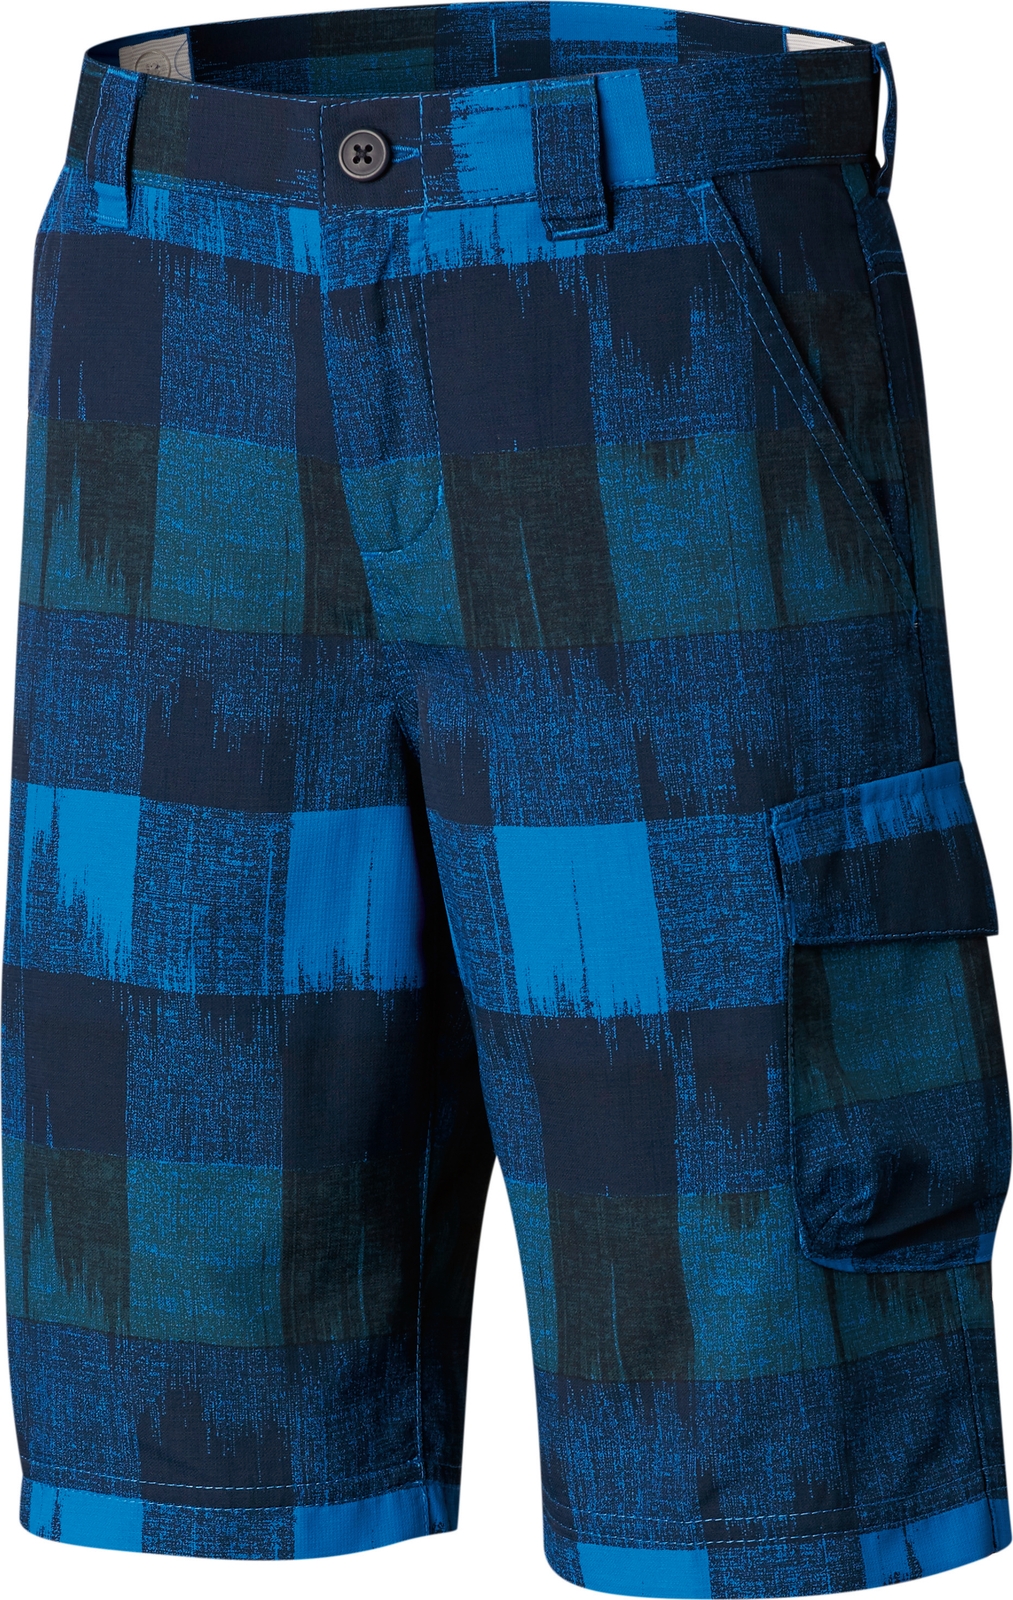 Шорты для мальчика Columbia Silver Ridge Printed Short, цвет: синий. 1715261-438. Размер 125/135